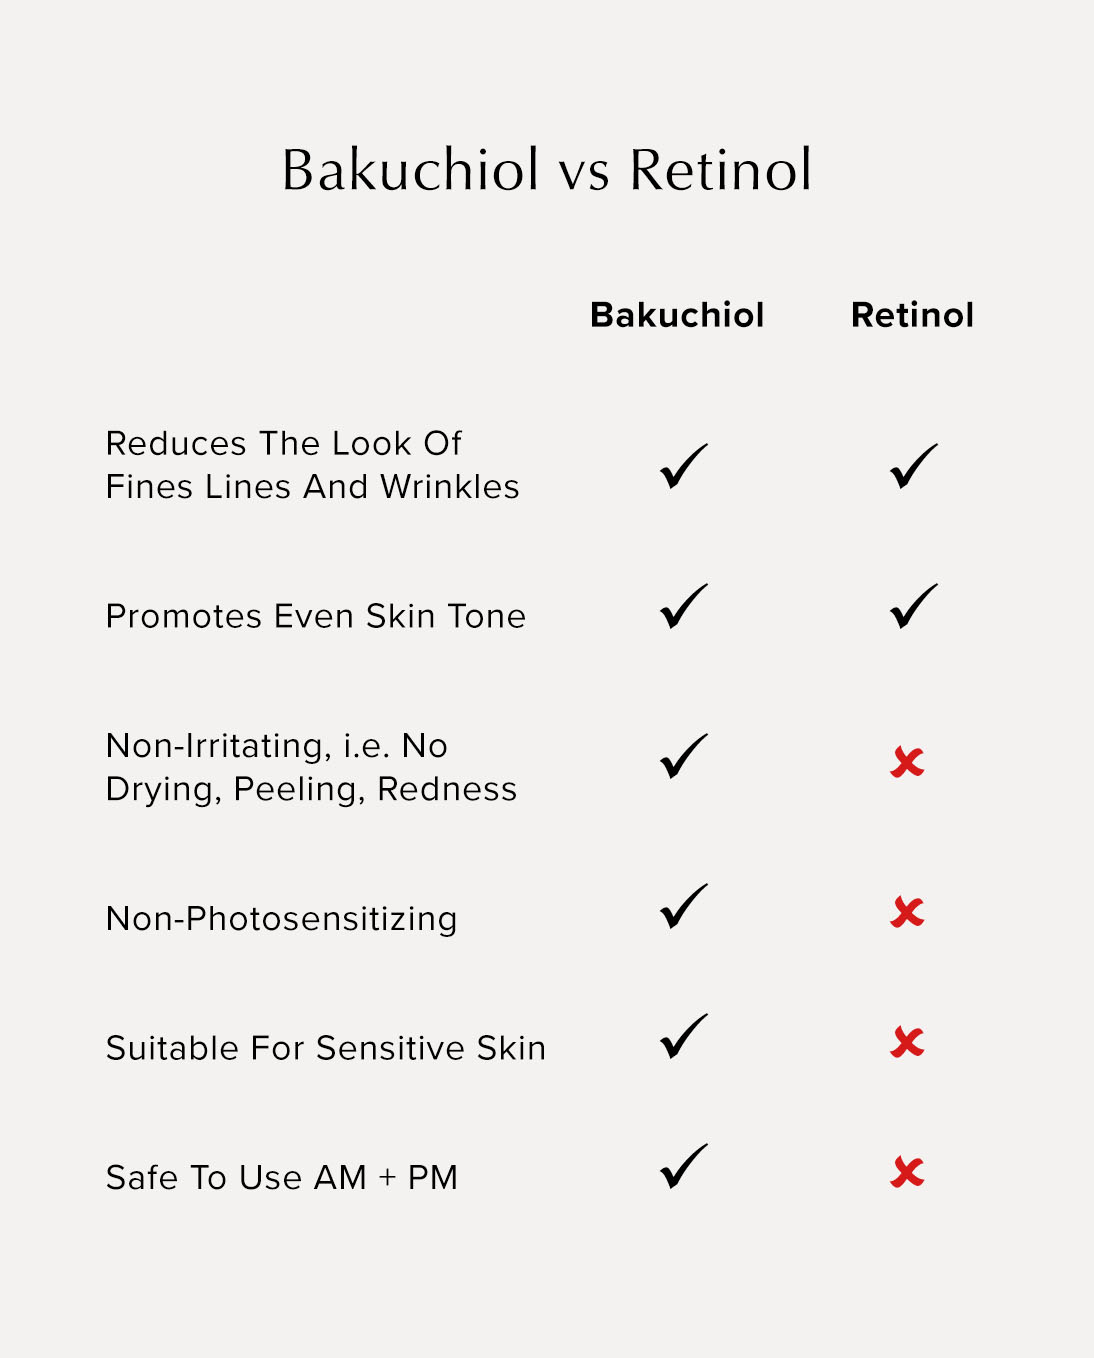 Is Bakuchiol Really Nature's Answer to Retinol?